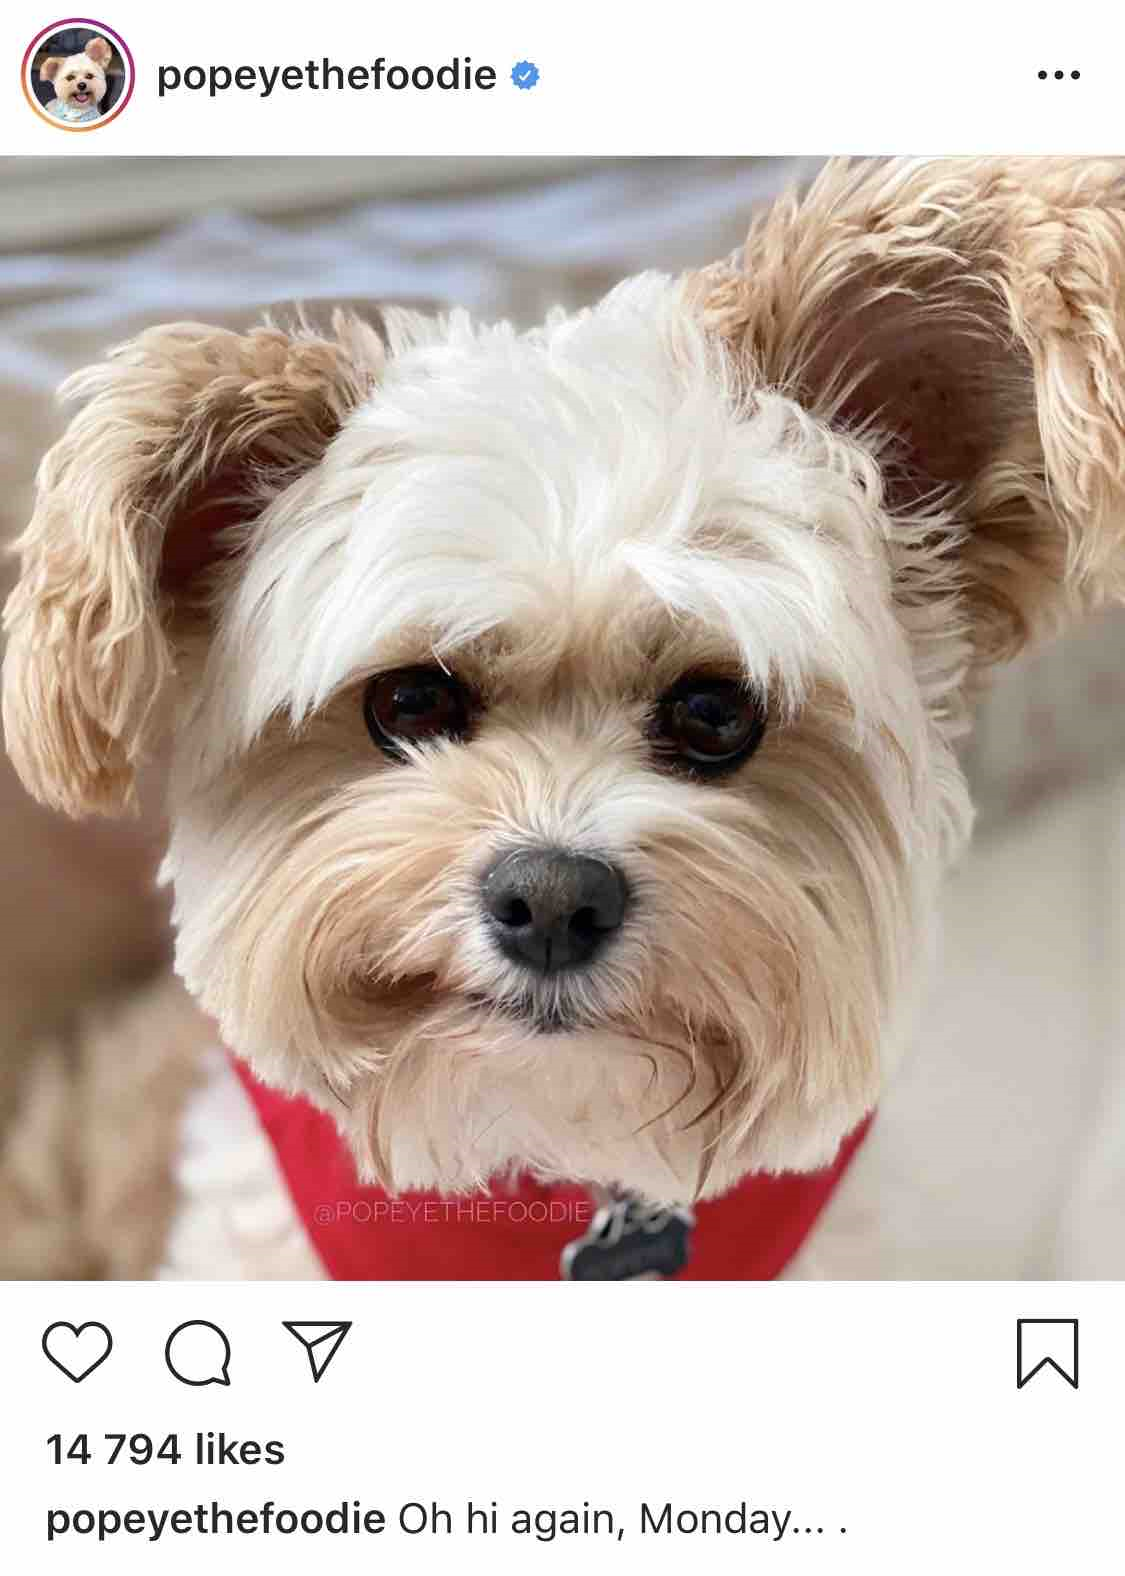 Popeye the Foodie Dog - Instagram